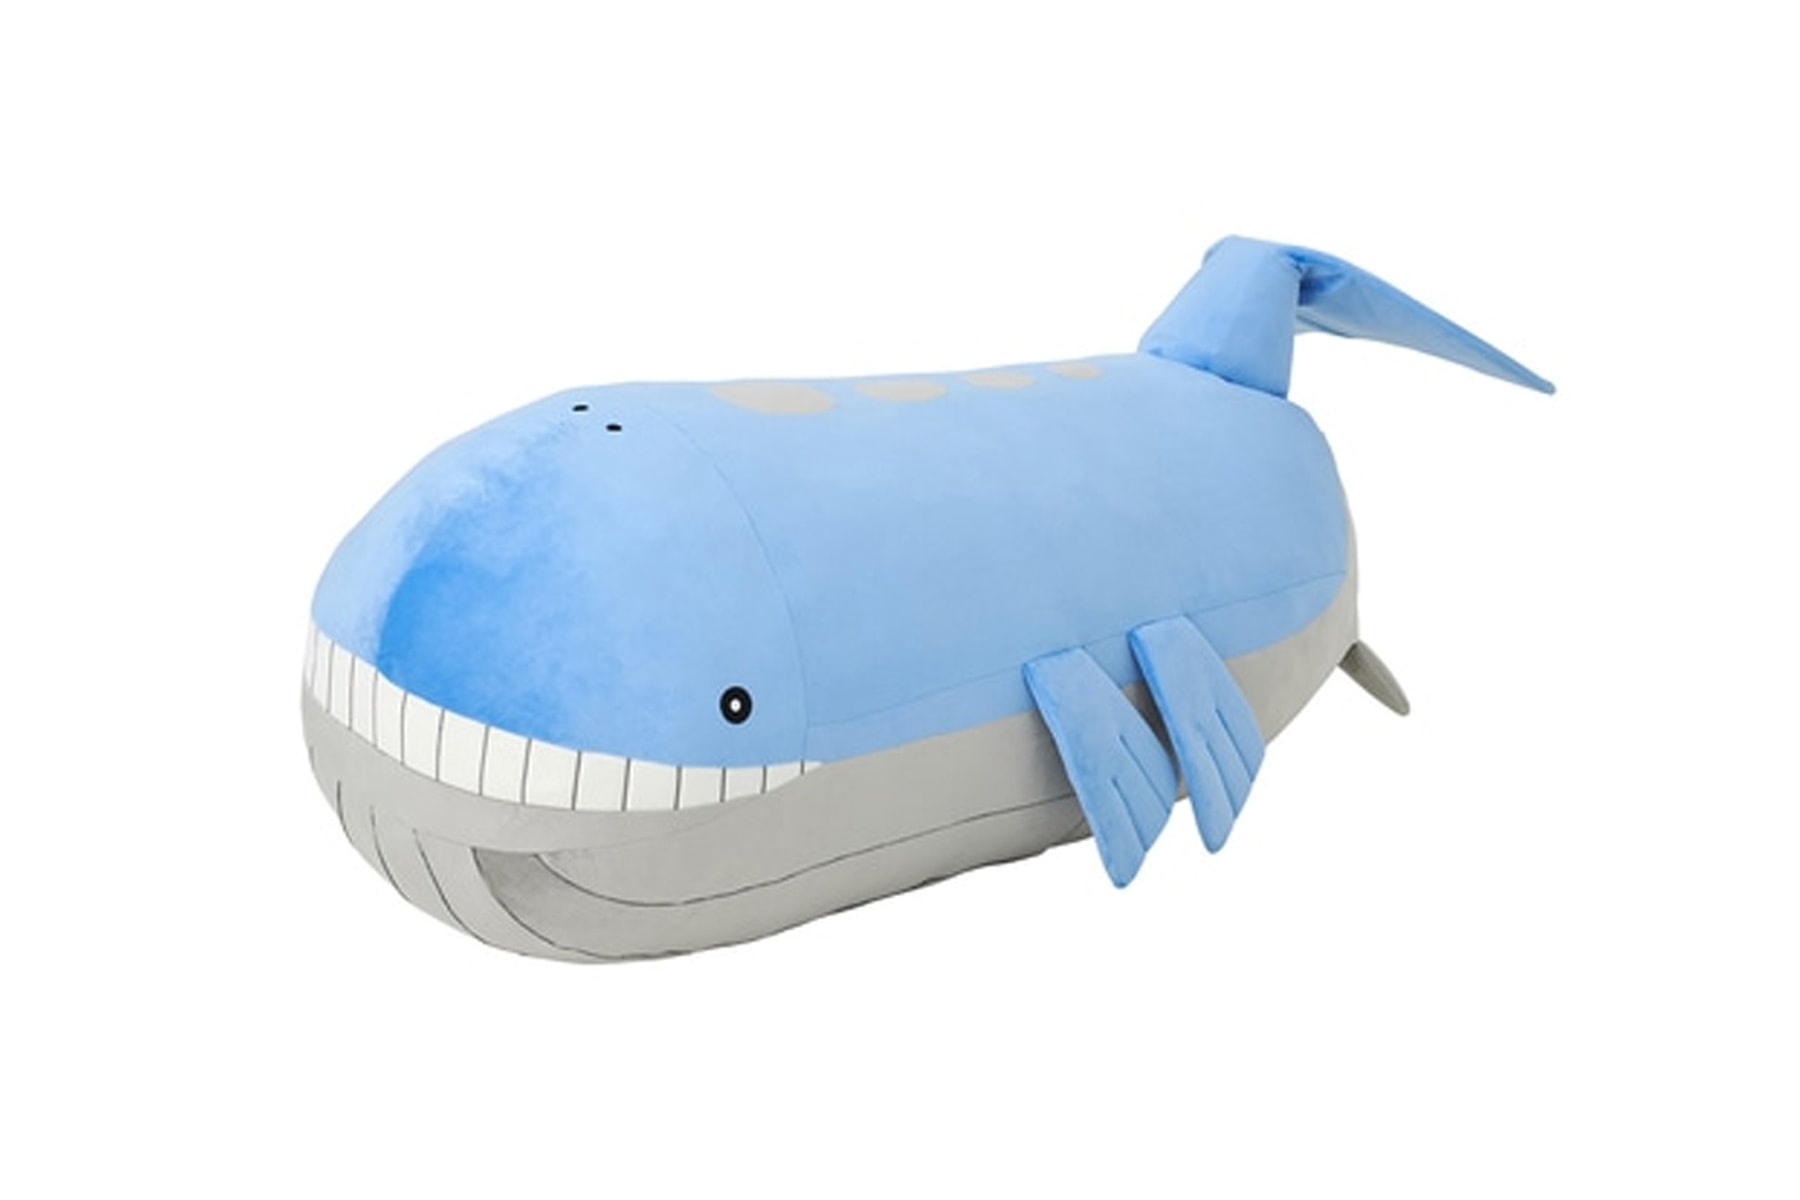 Pokémon 推出 1:10 尺寸「吼鯨王 Wailord」全新毛絨玩偶